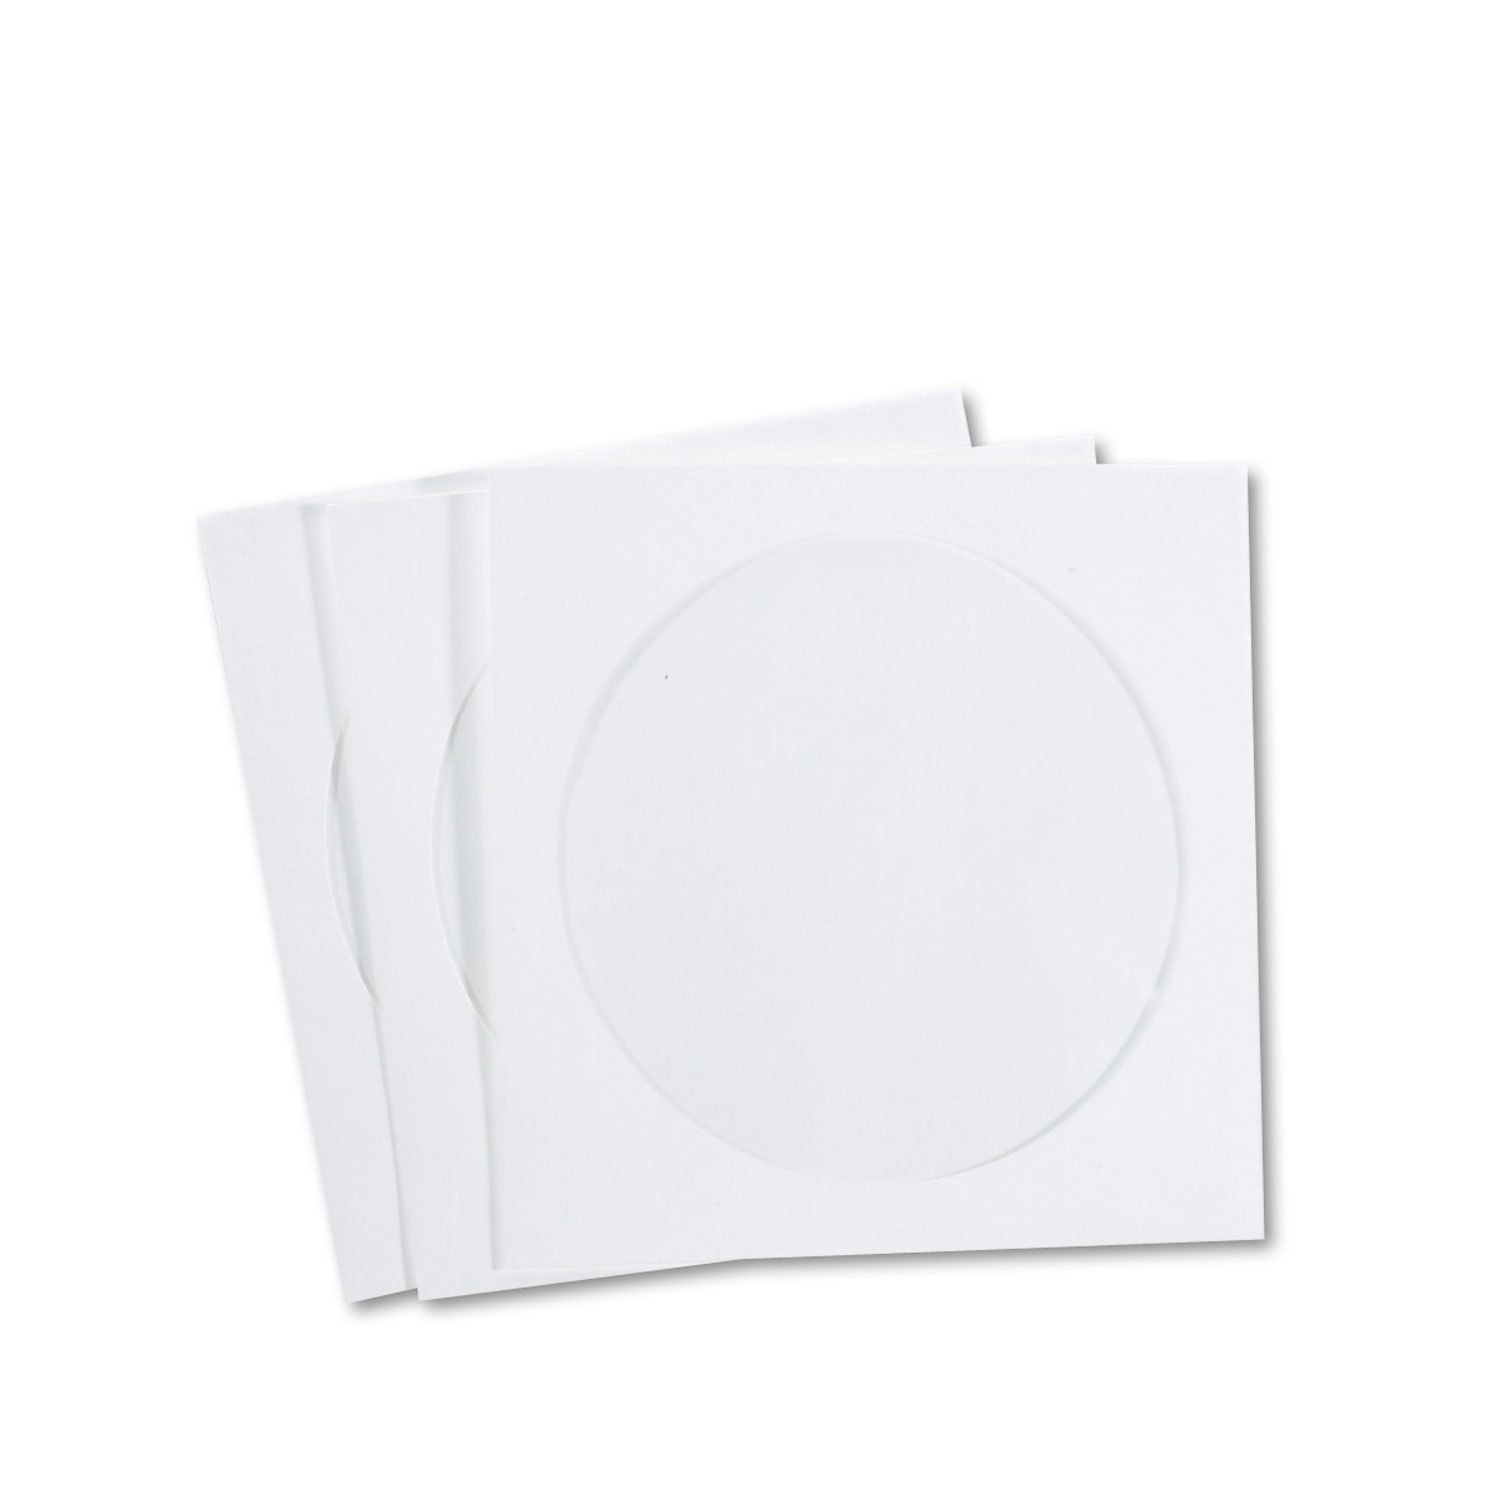  Quality Park QUAR7050 CD/DVD Sleeves, Moisture-Resistant TYVEK Material, 100/Box (QUAR7050) 